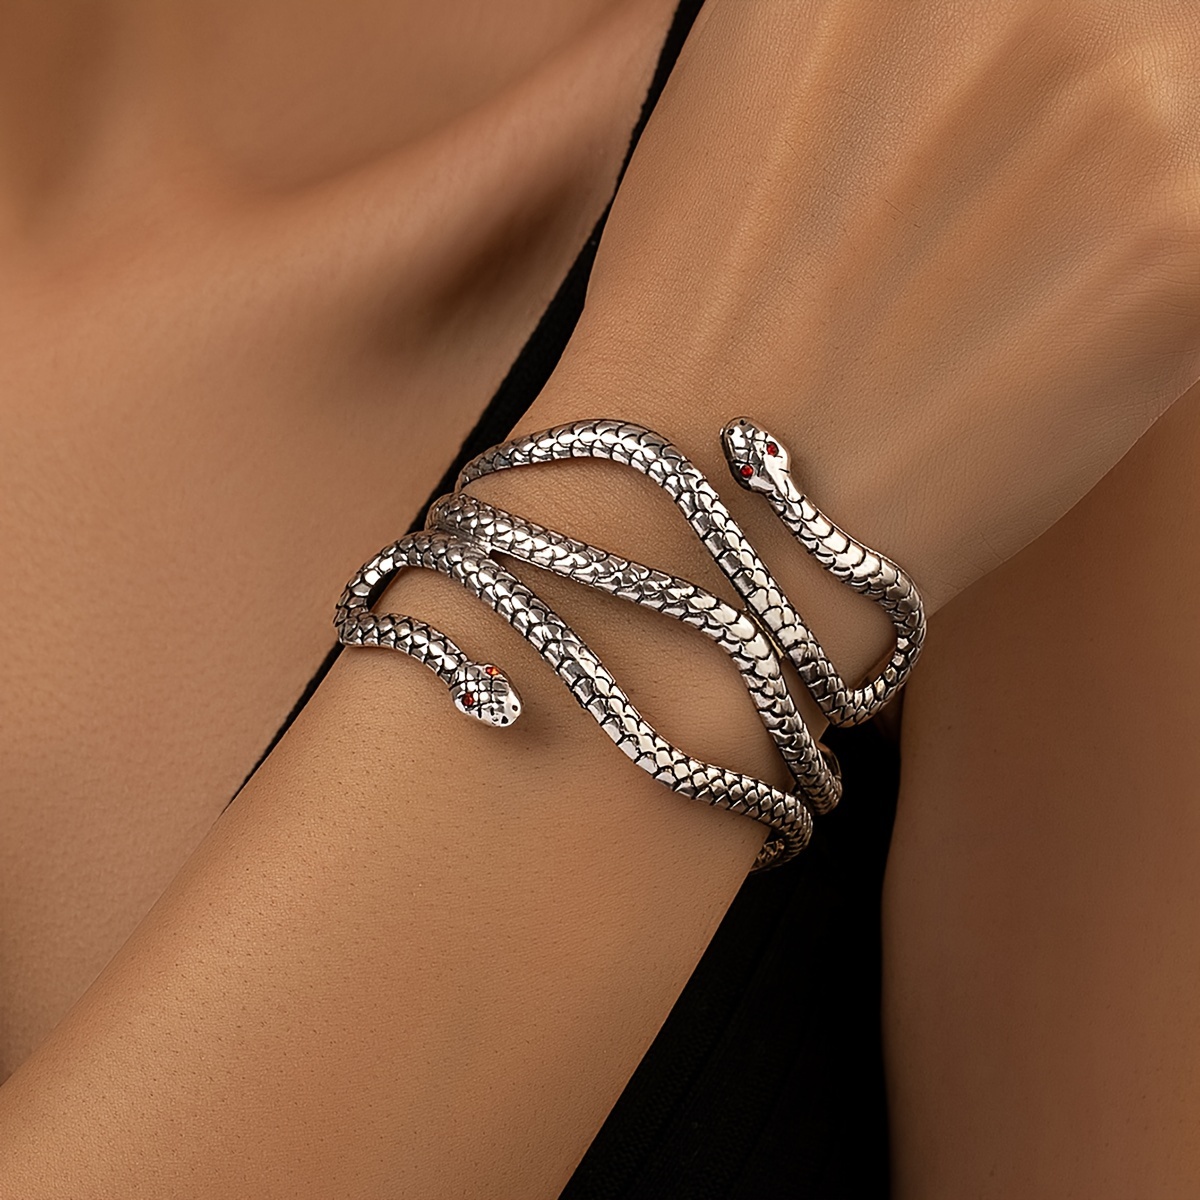 Silver Snake Bracelet, Bendable Wrist Cuff Bracelet, Serpent Arm